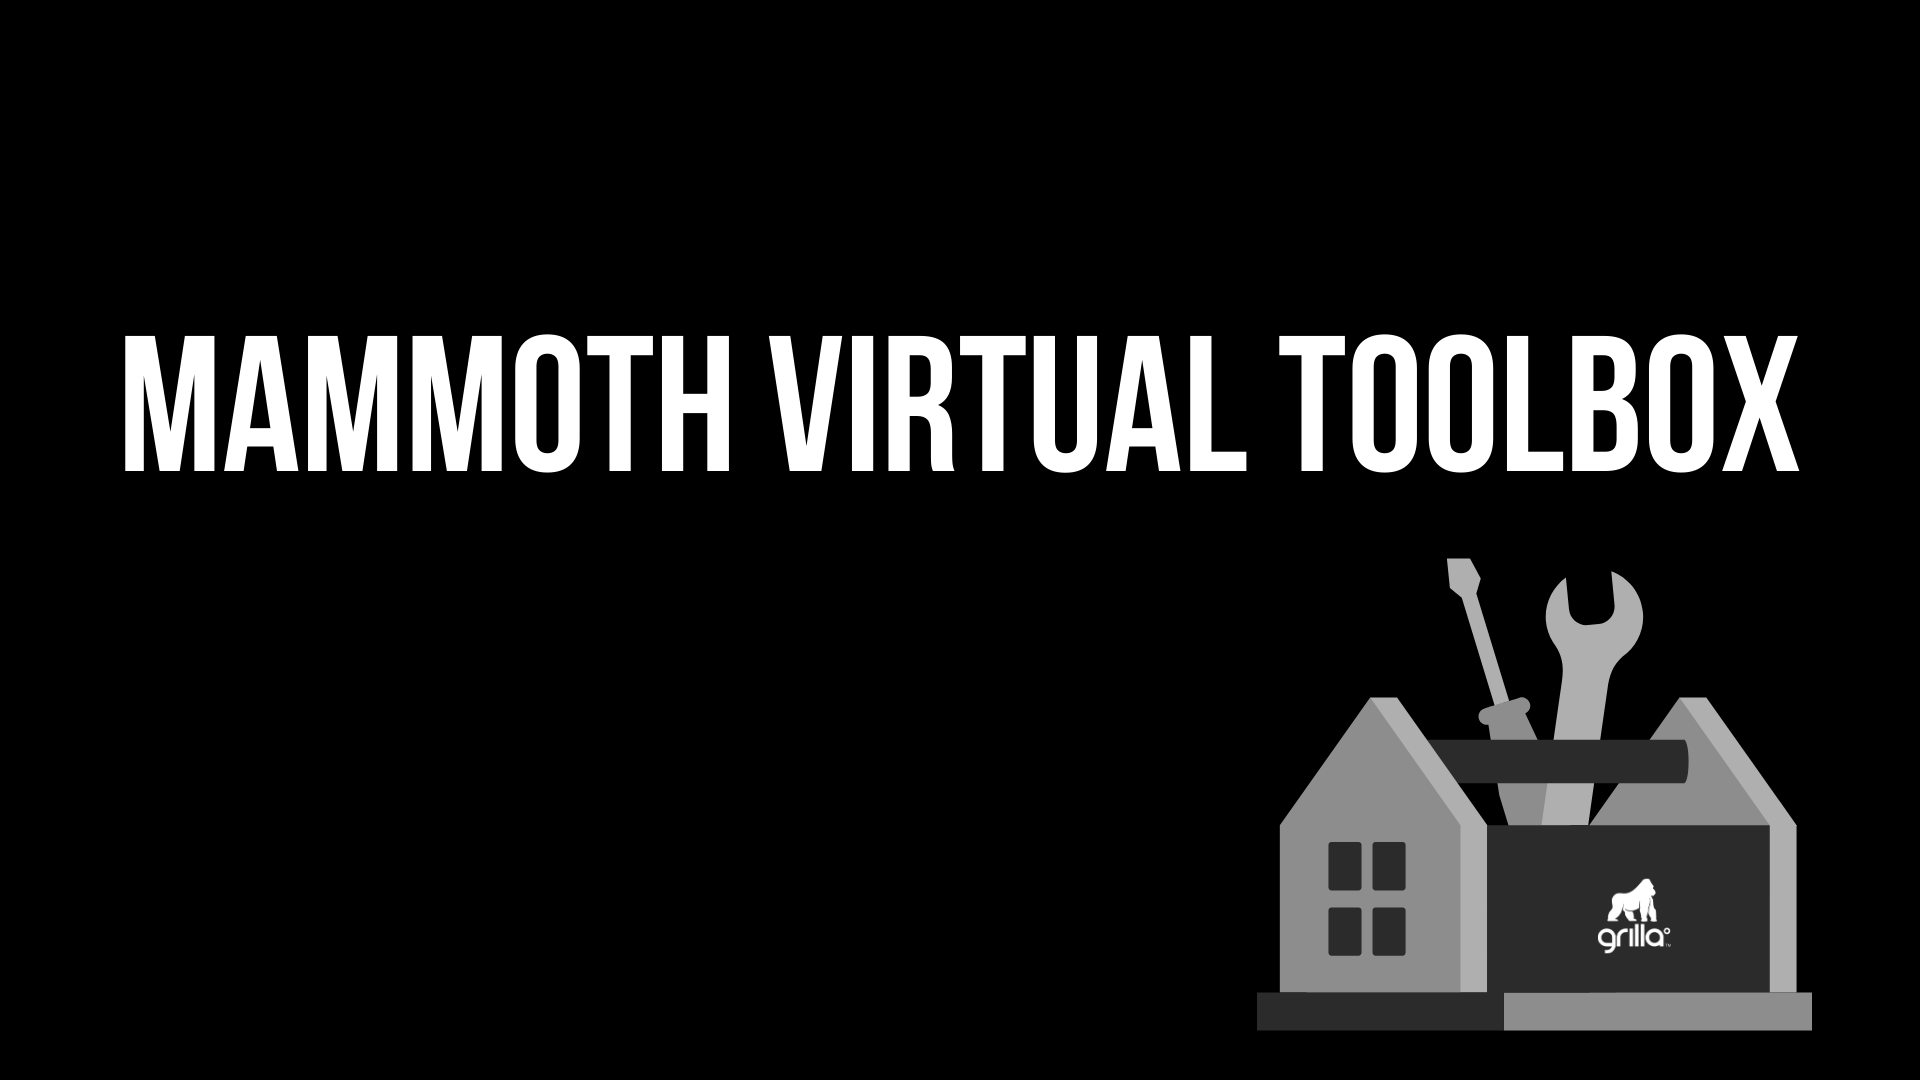 Mammoth Virtual Toolbox